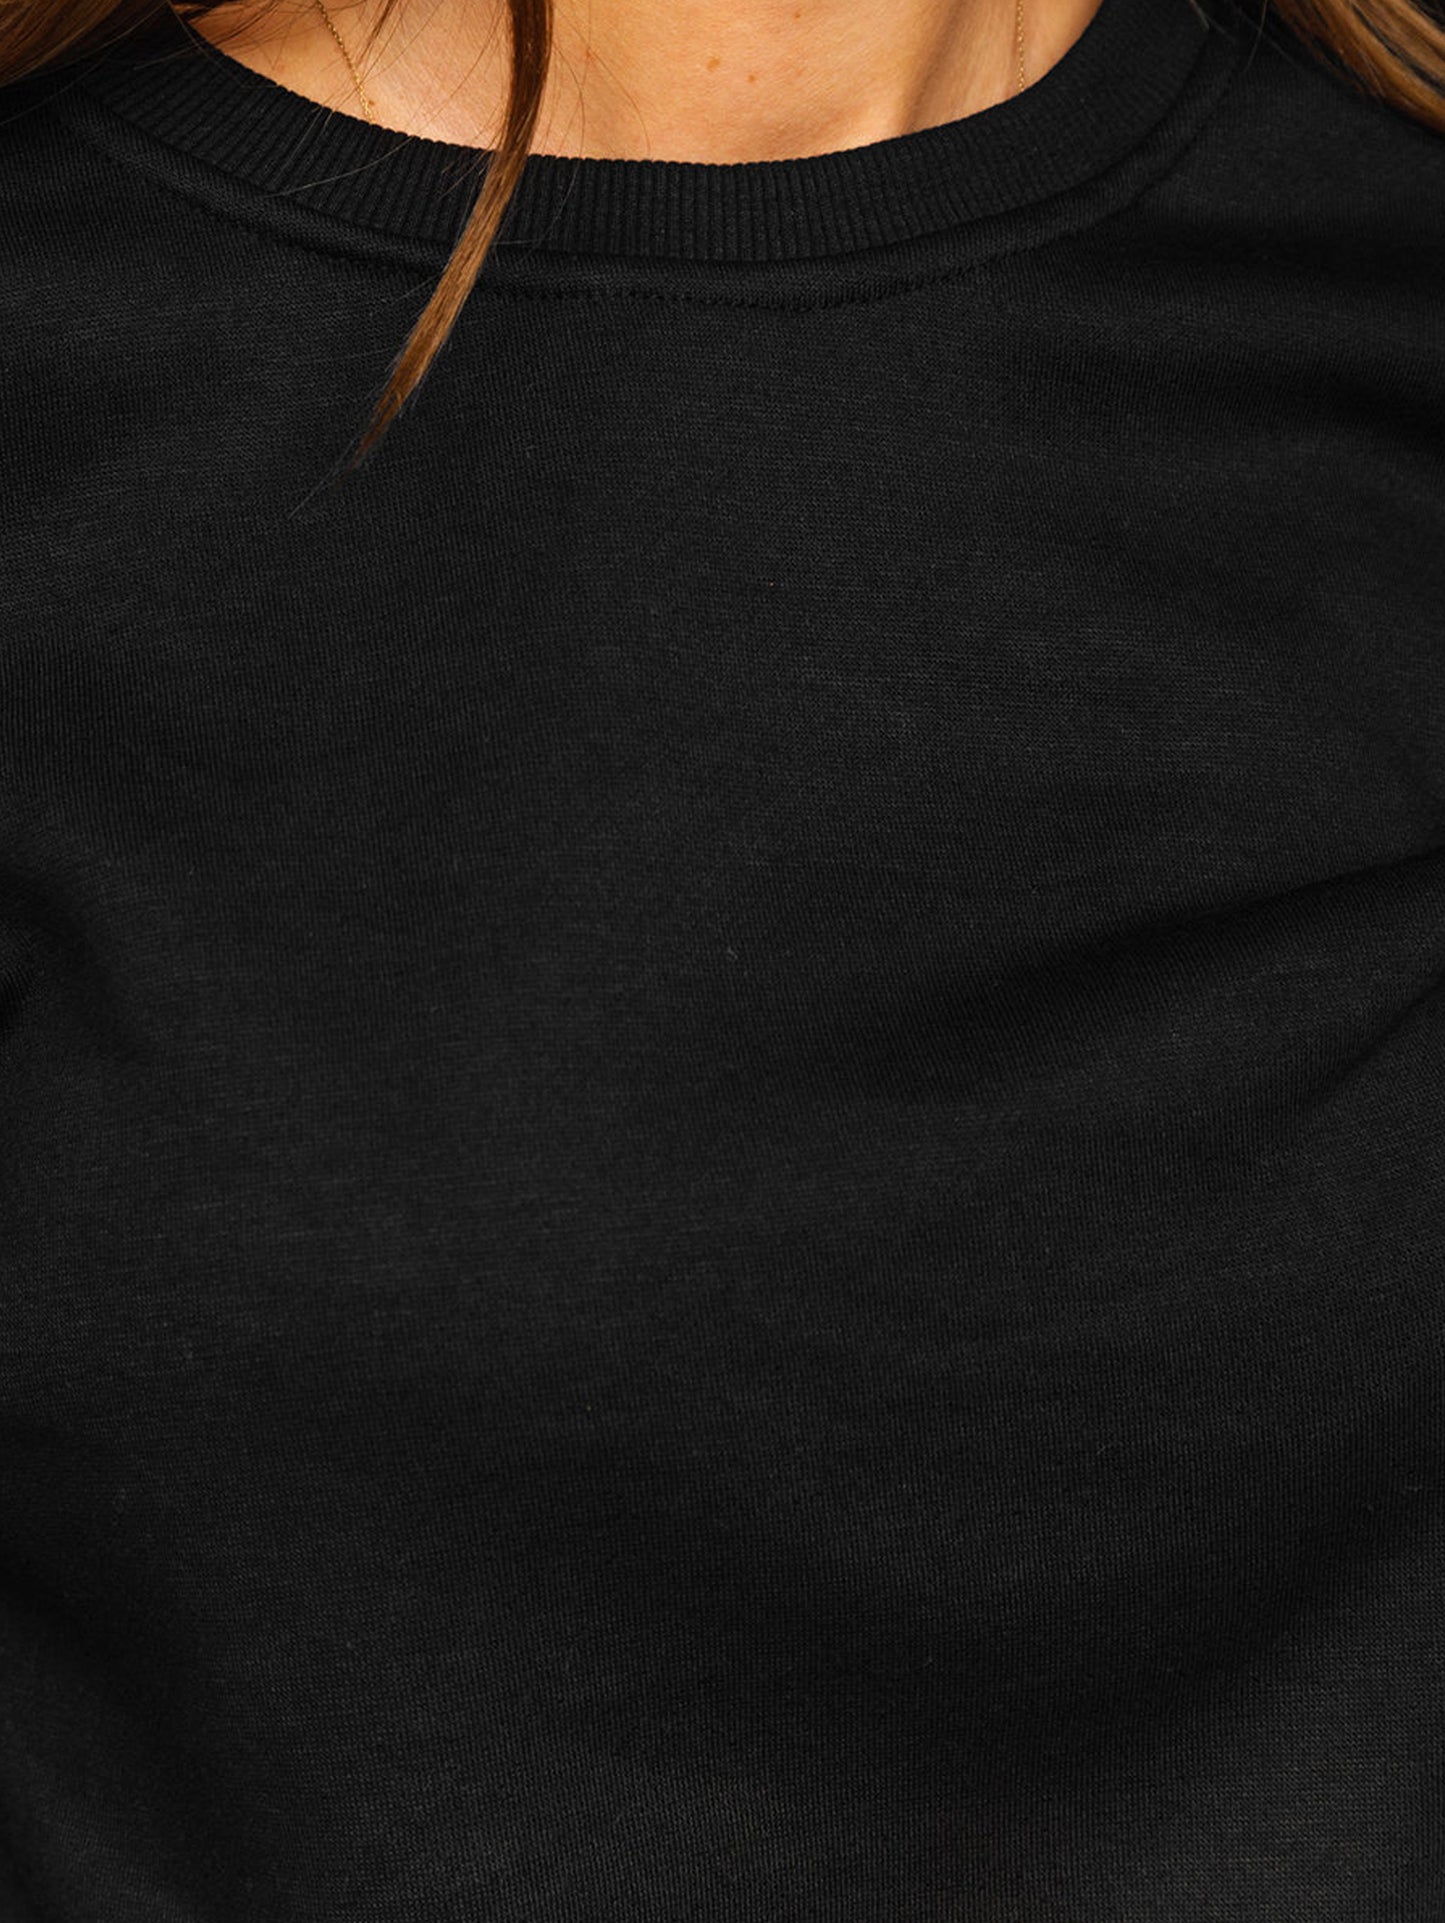 Women's Basic Black Sweatshirt